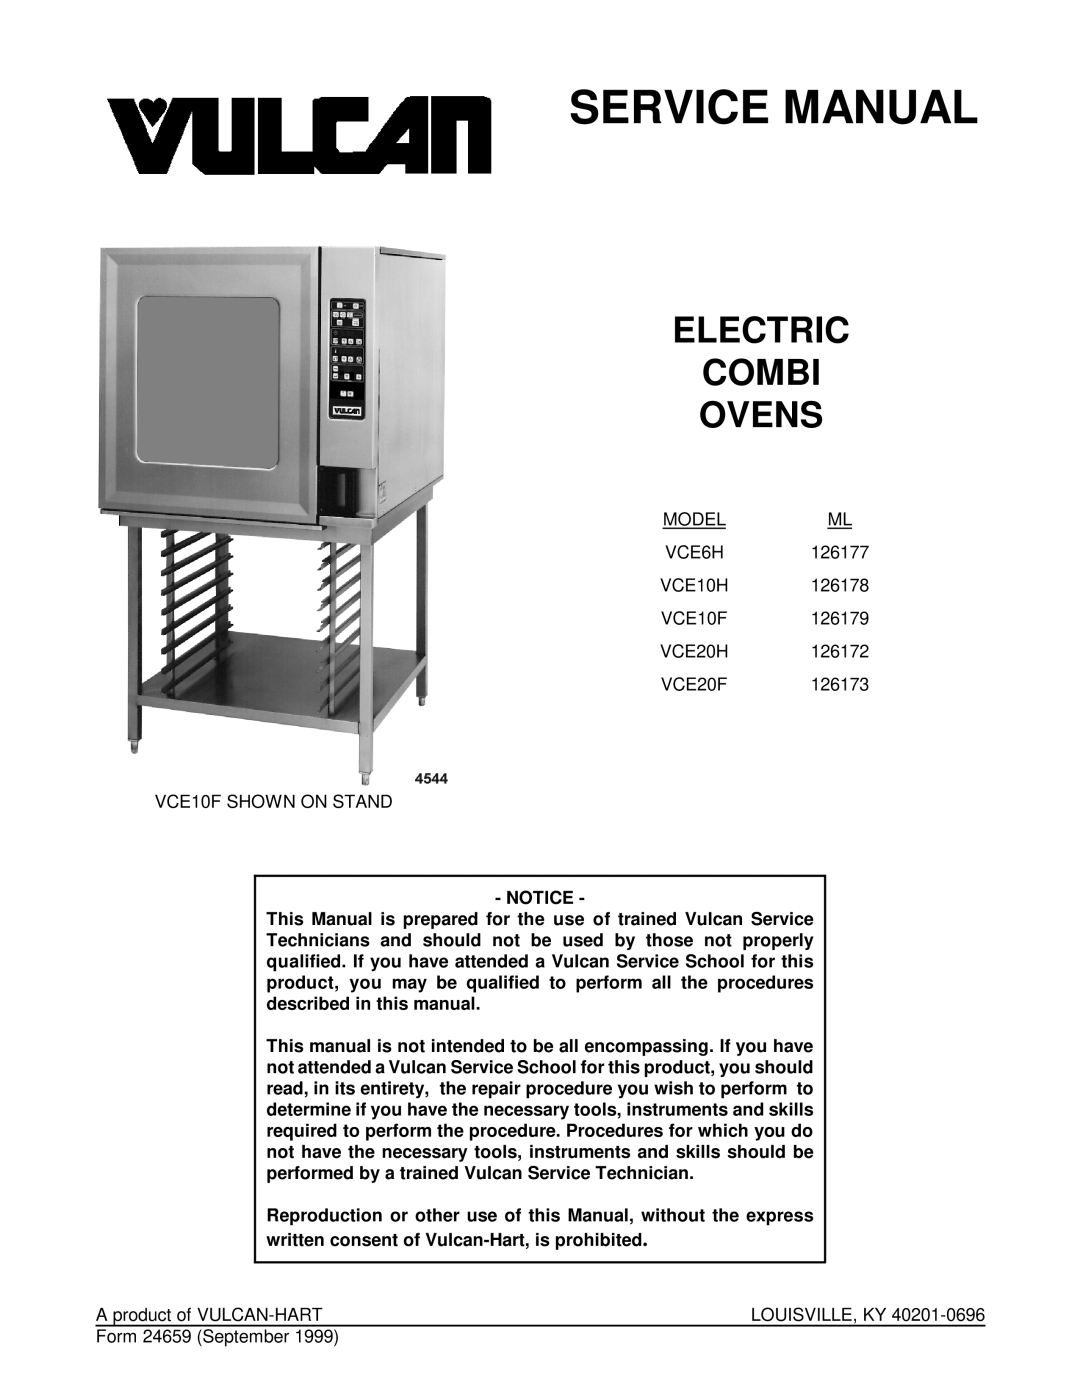 Vulcan-Hart VCE10H 126178, VCE20H 126172, VCE6H 126177 service manual Electric Combi Ovens, Notice, Service Manual 